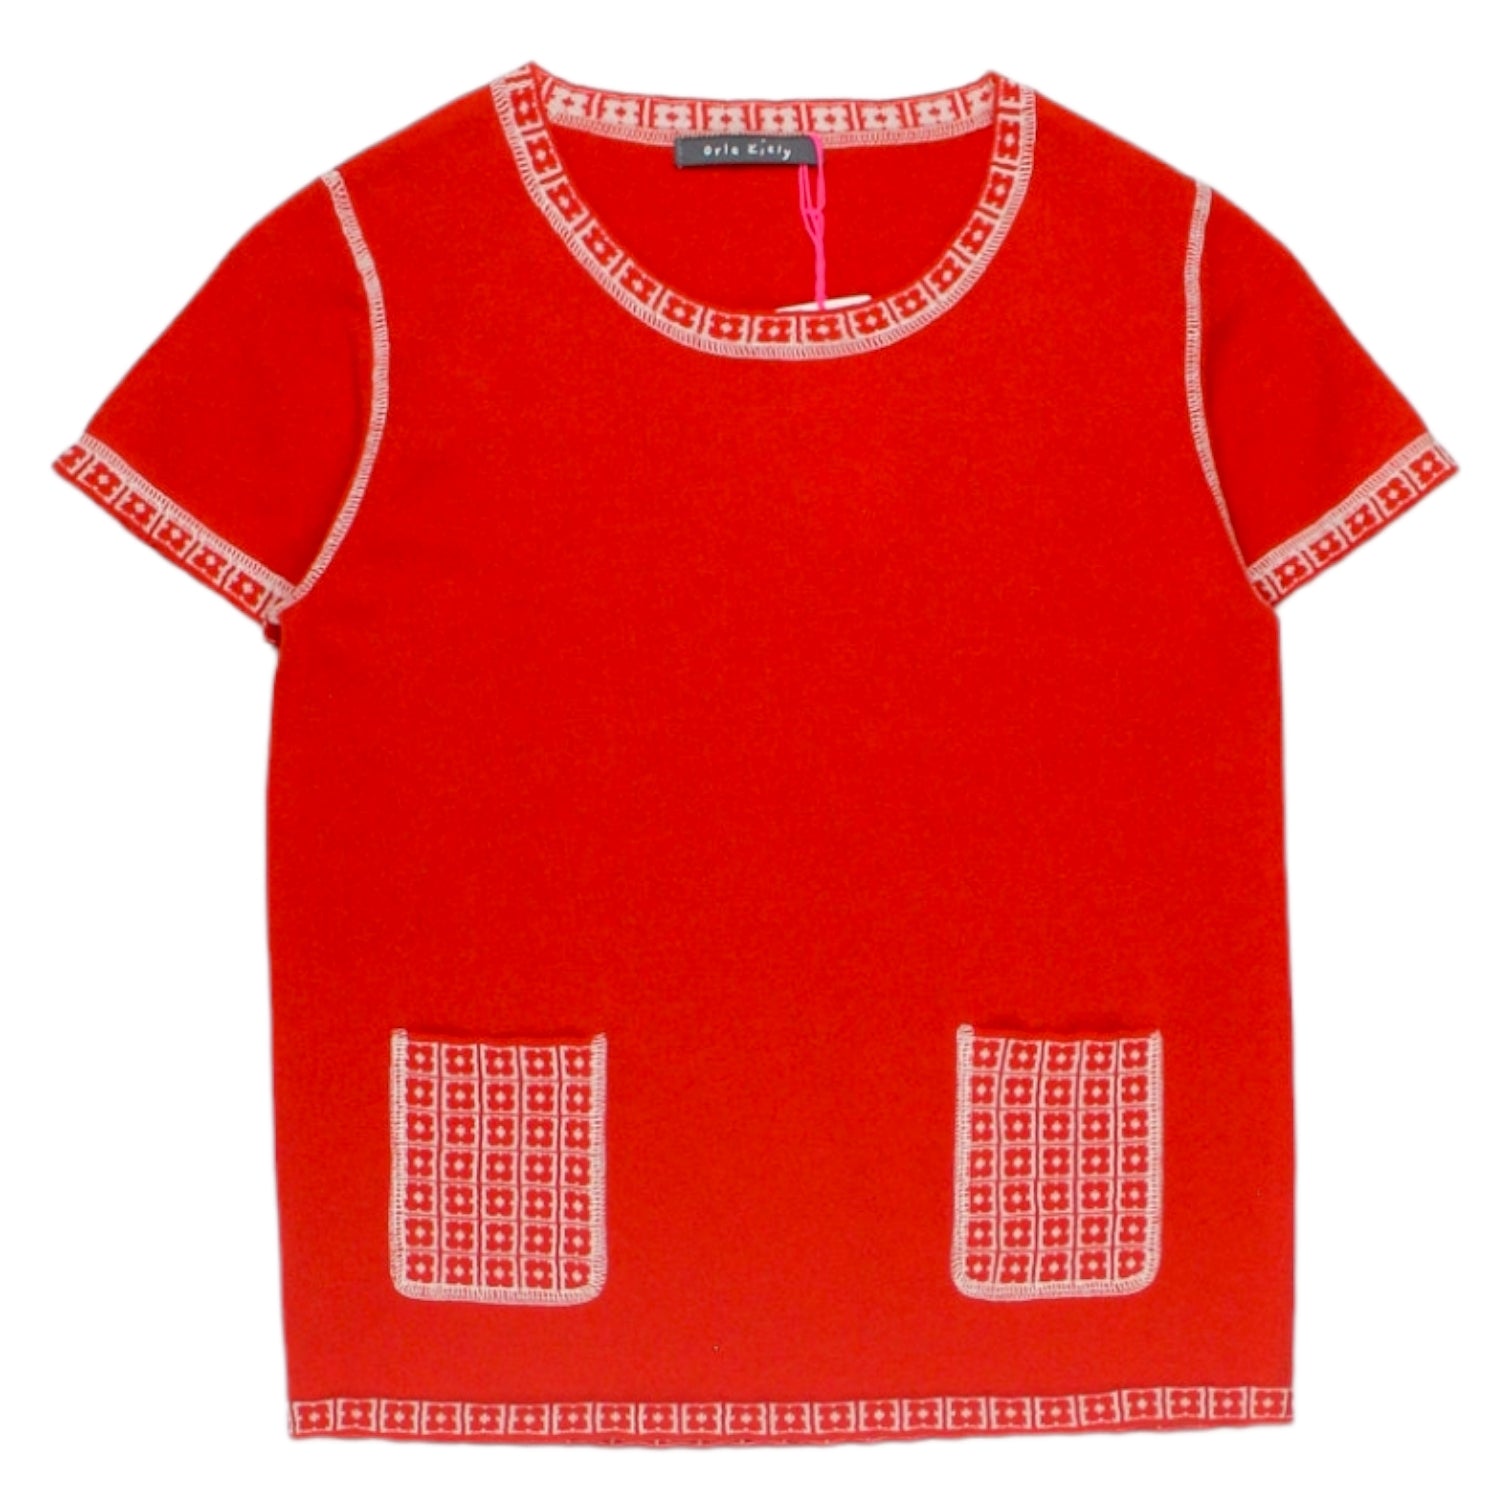 Orla Kiely Red Short Sleeve Knit Top